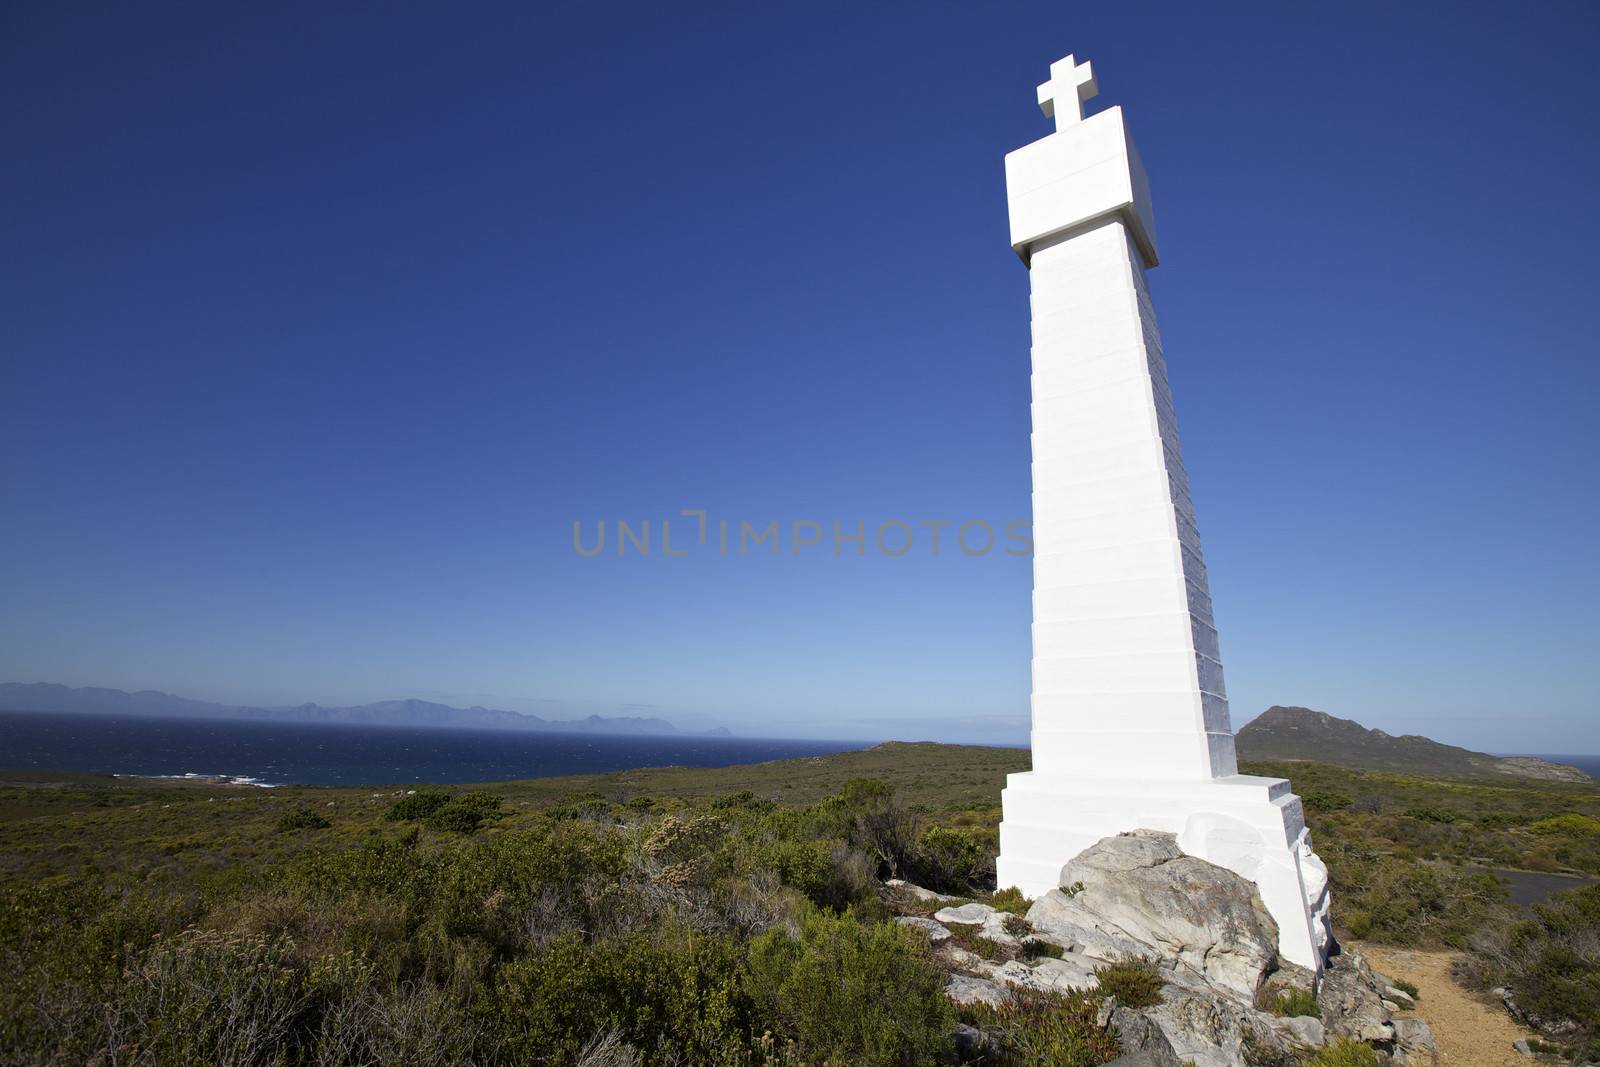 Coastal Llook out near Cape Town, Cape Point - Vasca da Gama and Bartholomeu Dias Cross. Landmark discovered the sea route from Africa to India